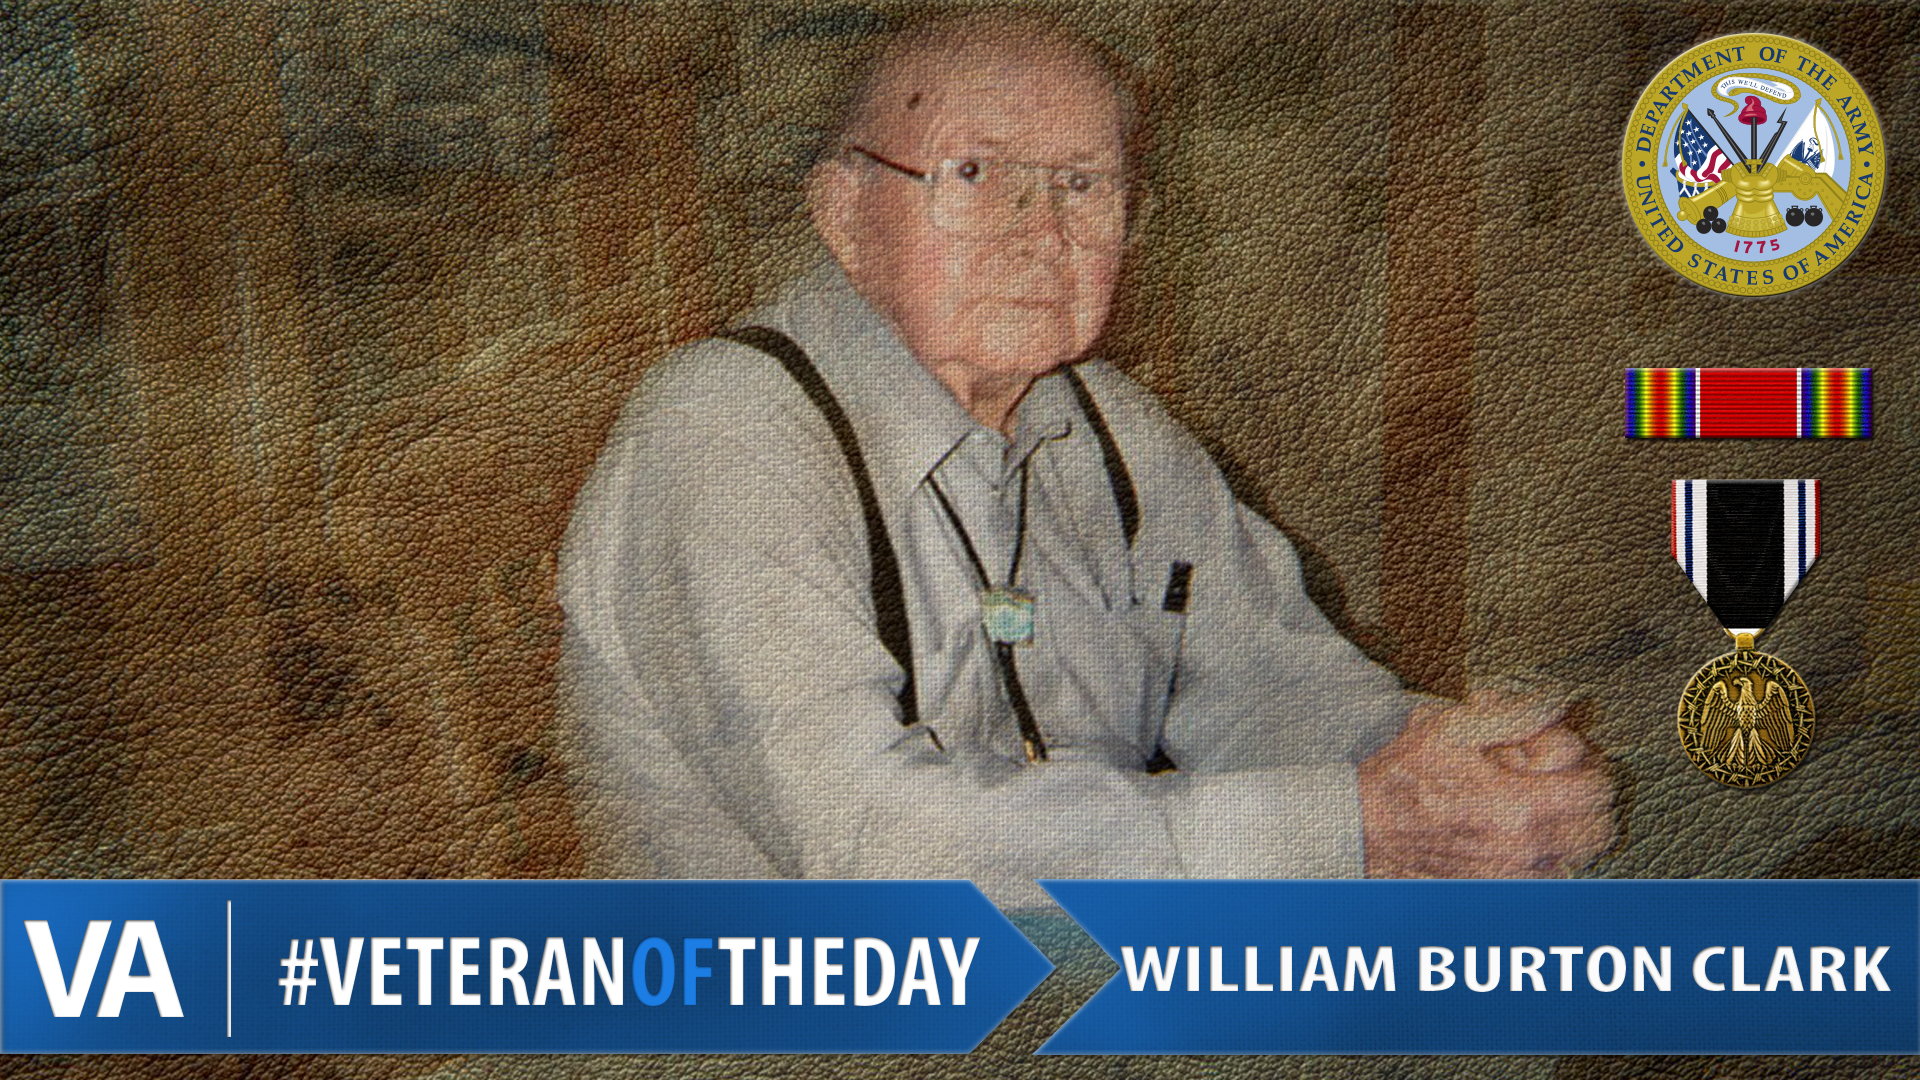 #VeteranOfTheDay William Burton Clark - VA News